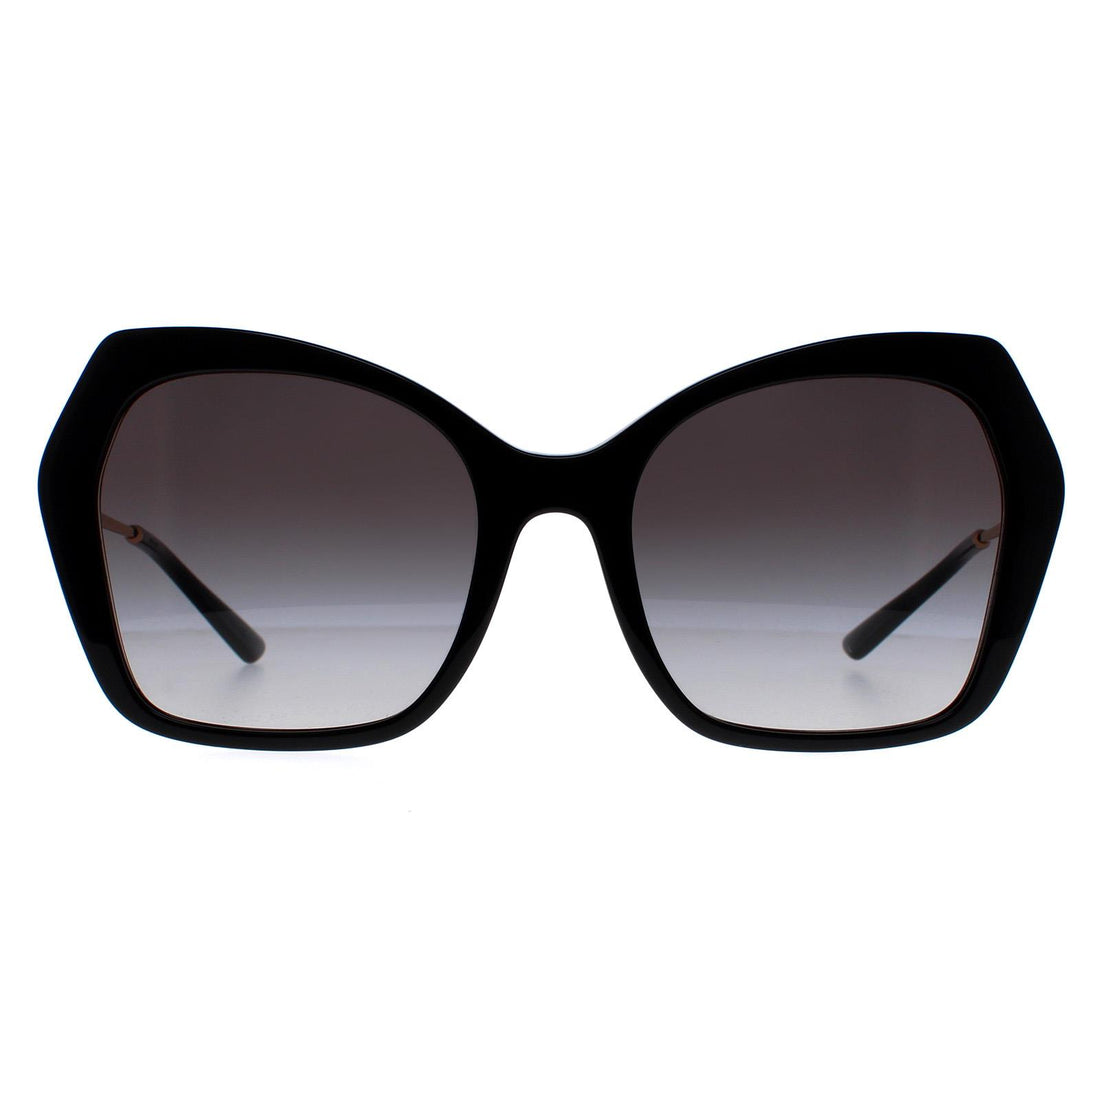 Dolce & Gabbana DG4399 Sunglasses Black / Grey Gradient